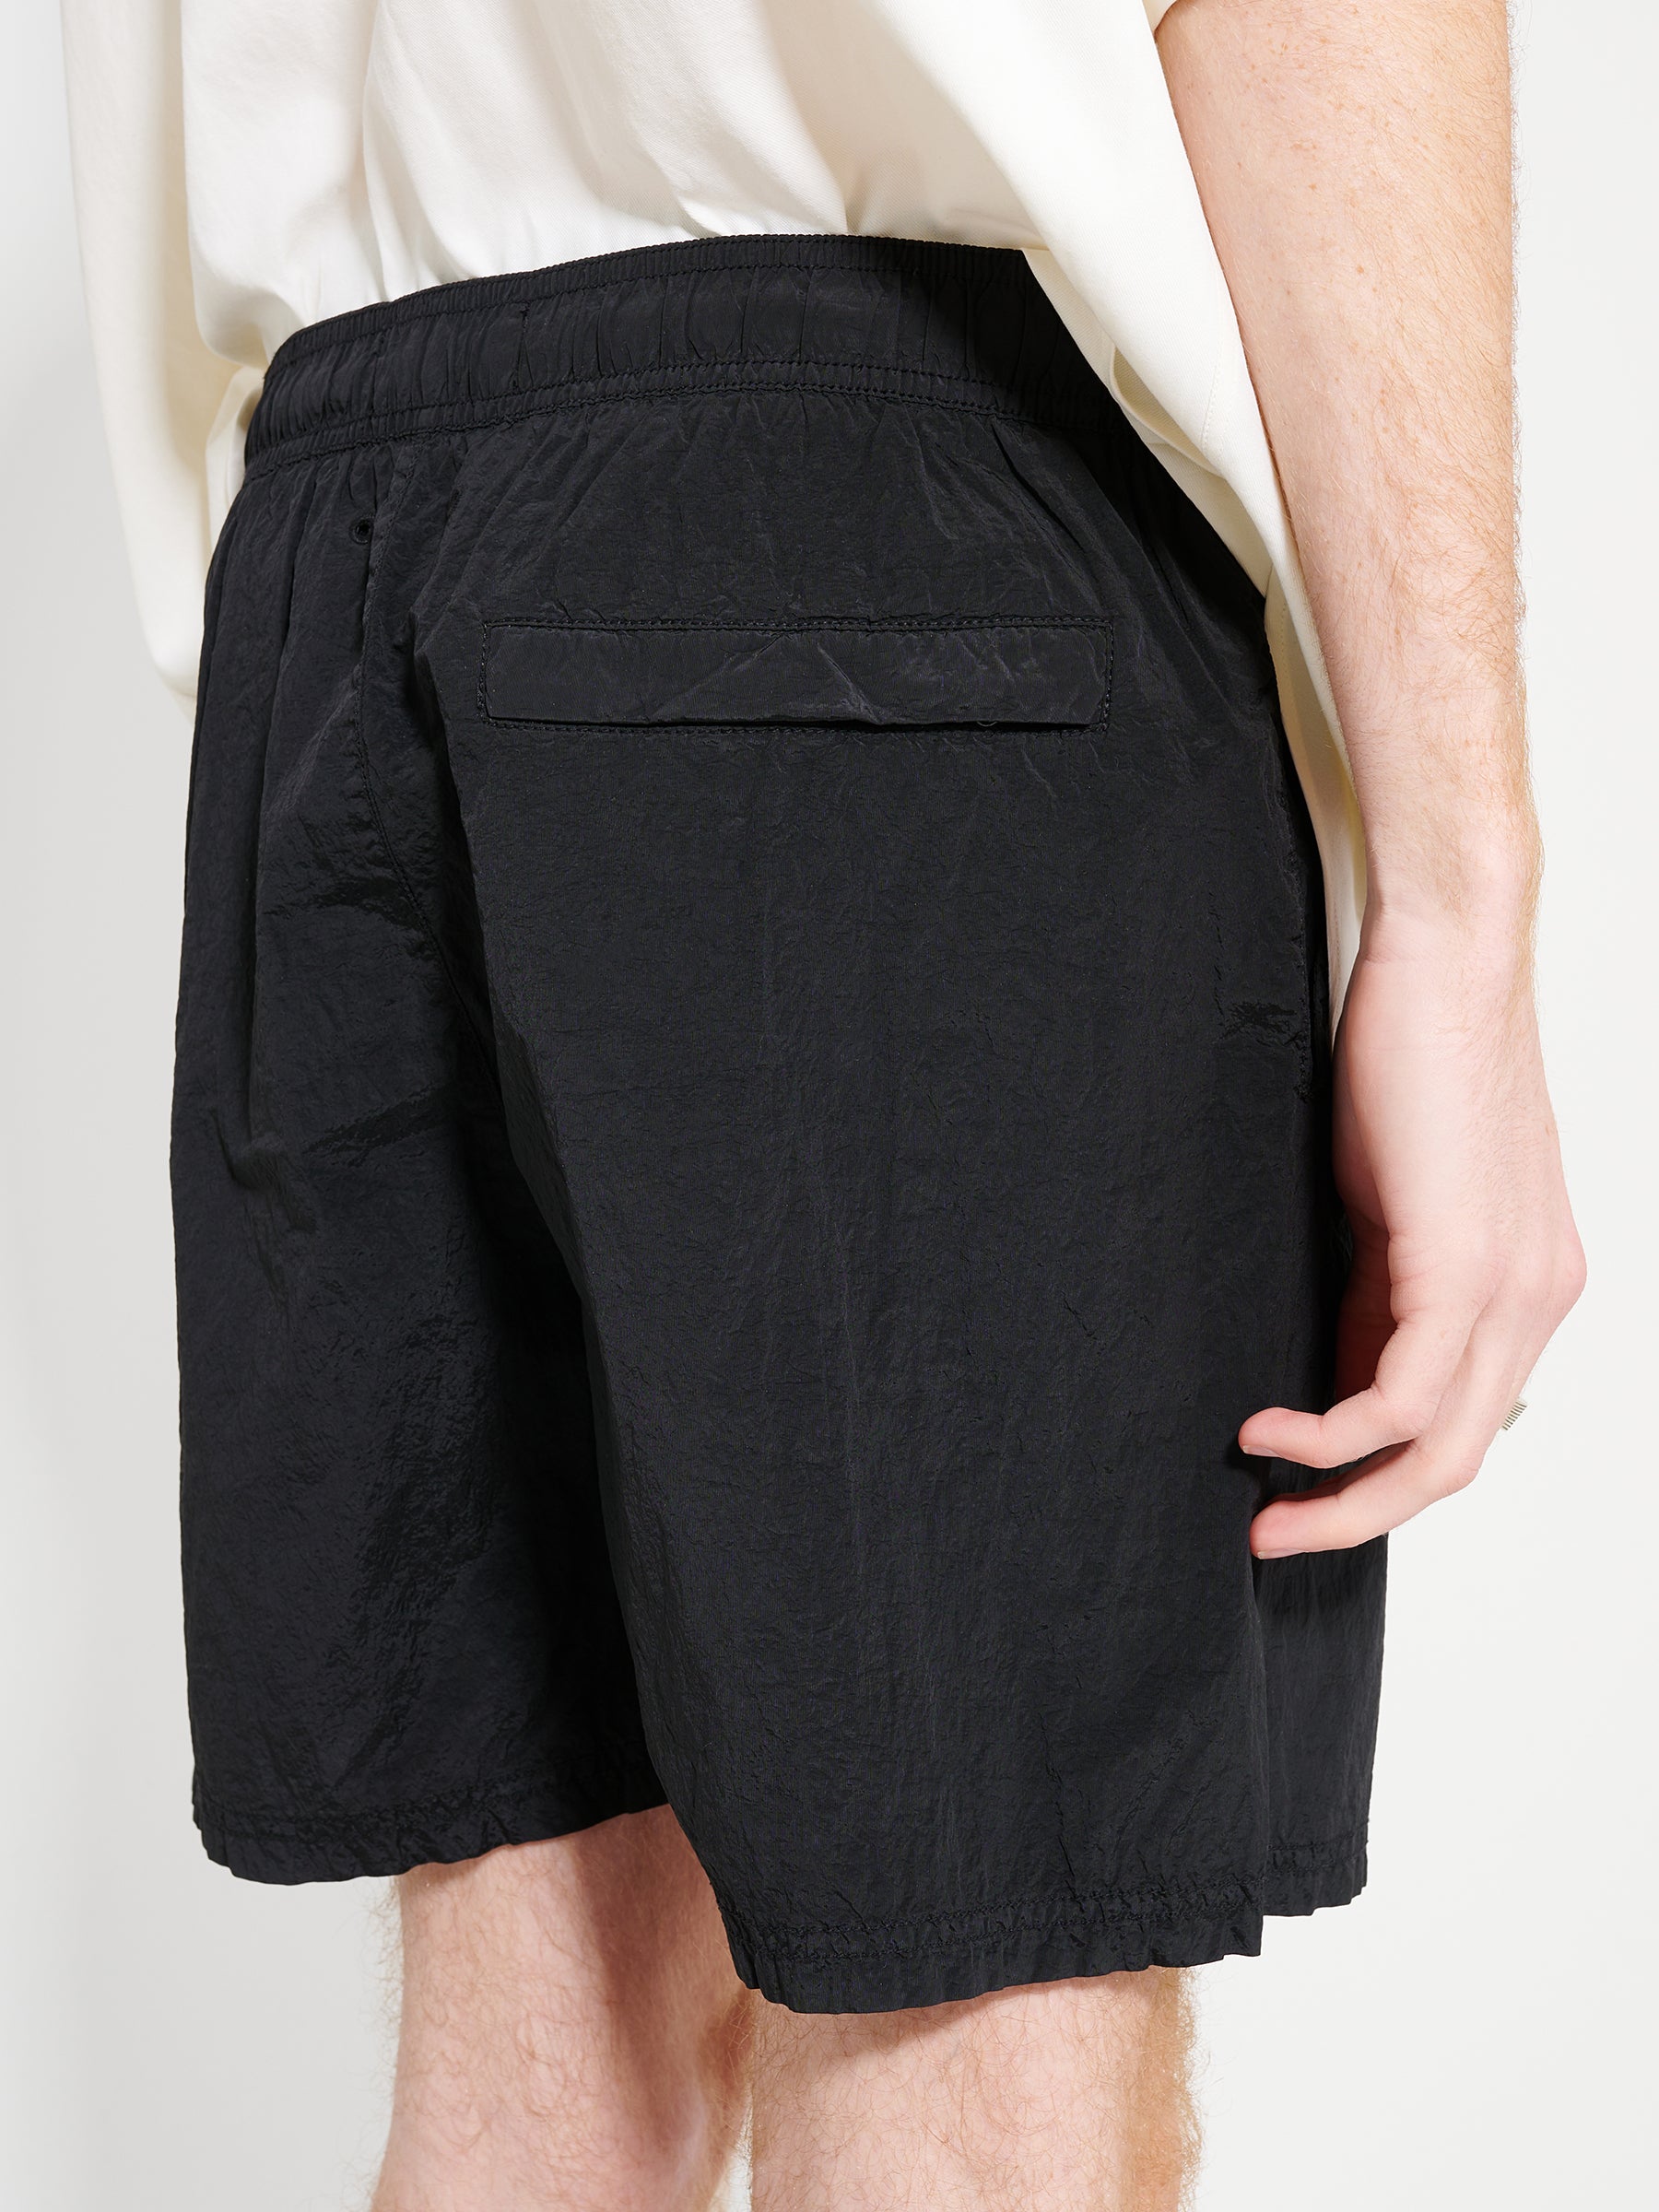 Stone Island Nylon Shorts Black